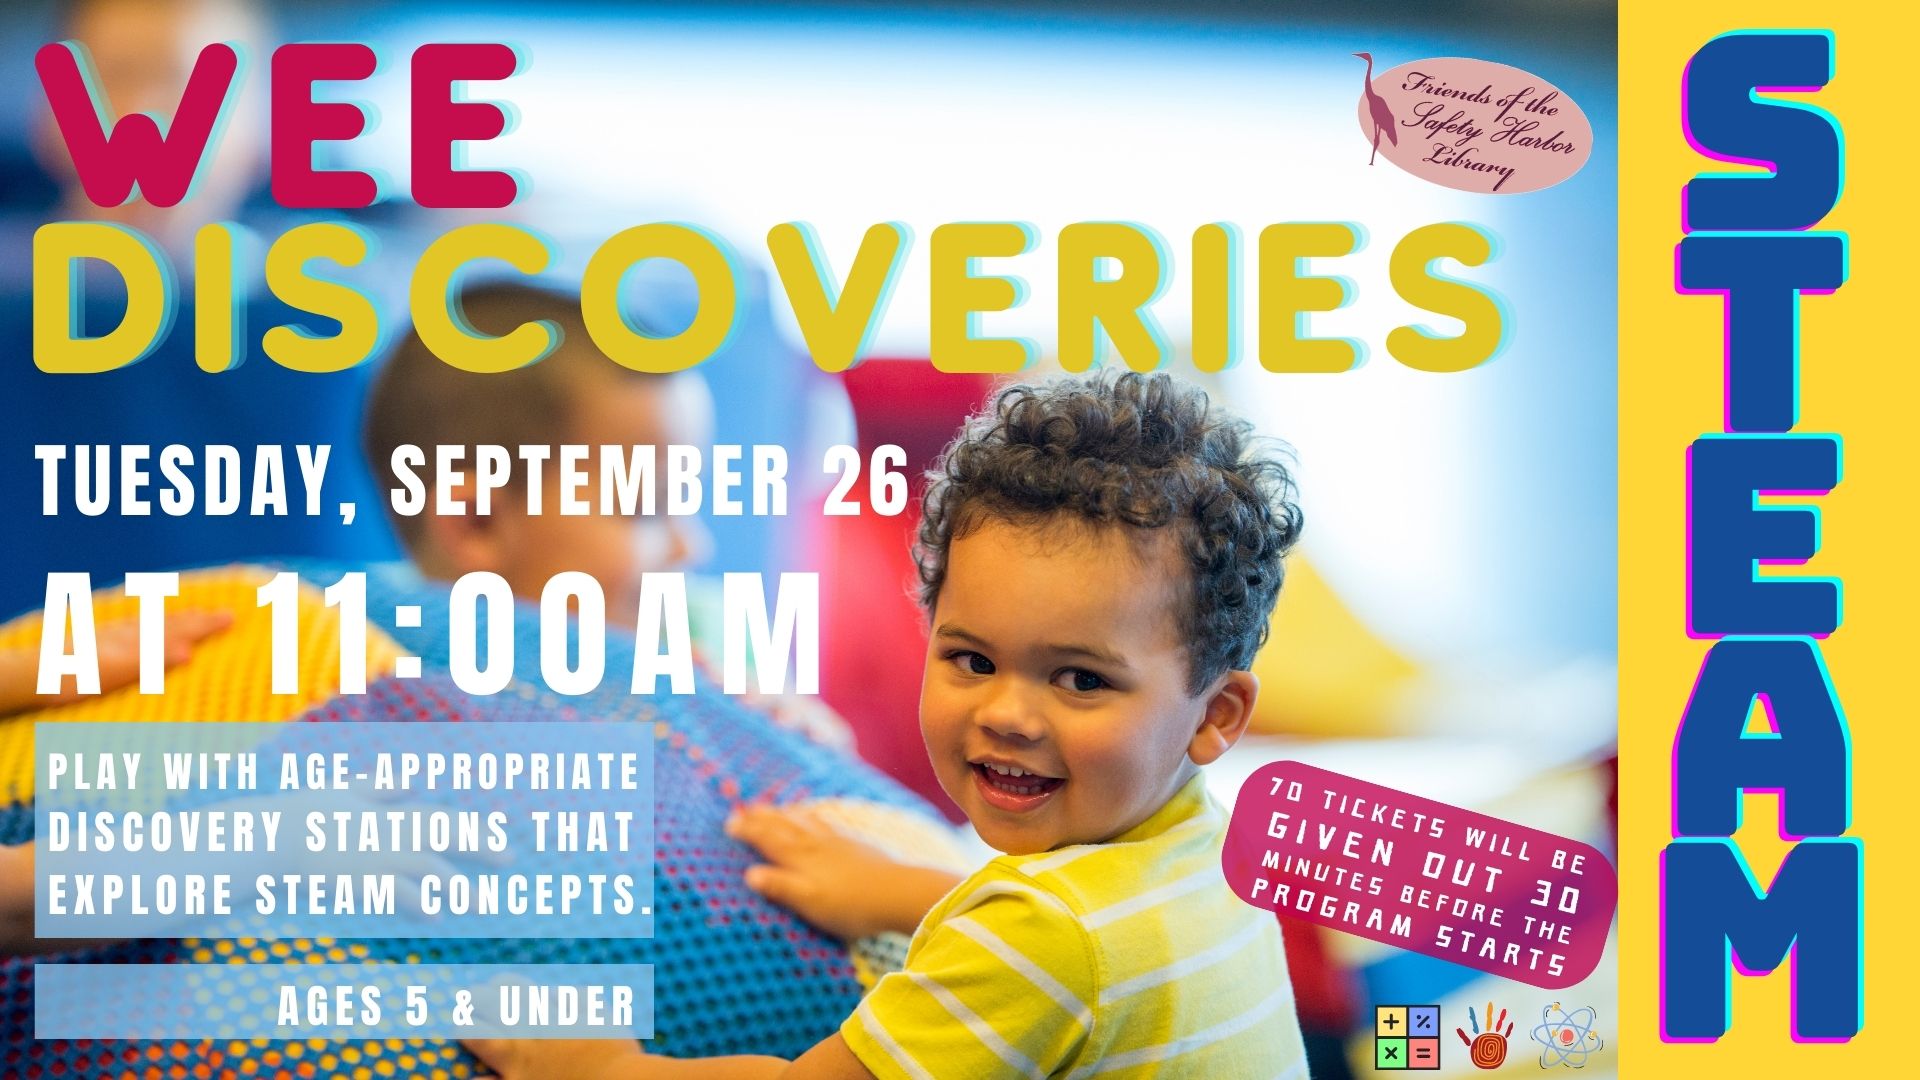 Wee Discoveries STEAM program for Preschoolers 